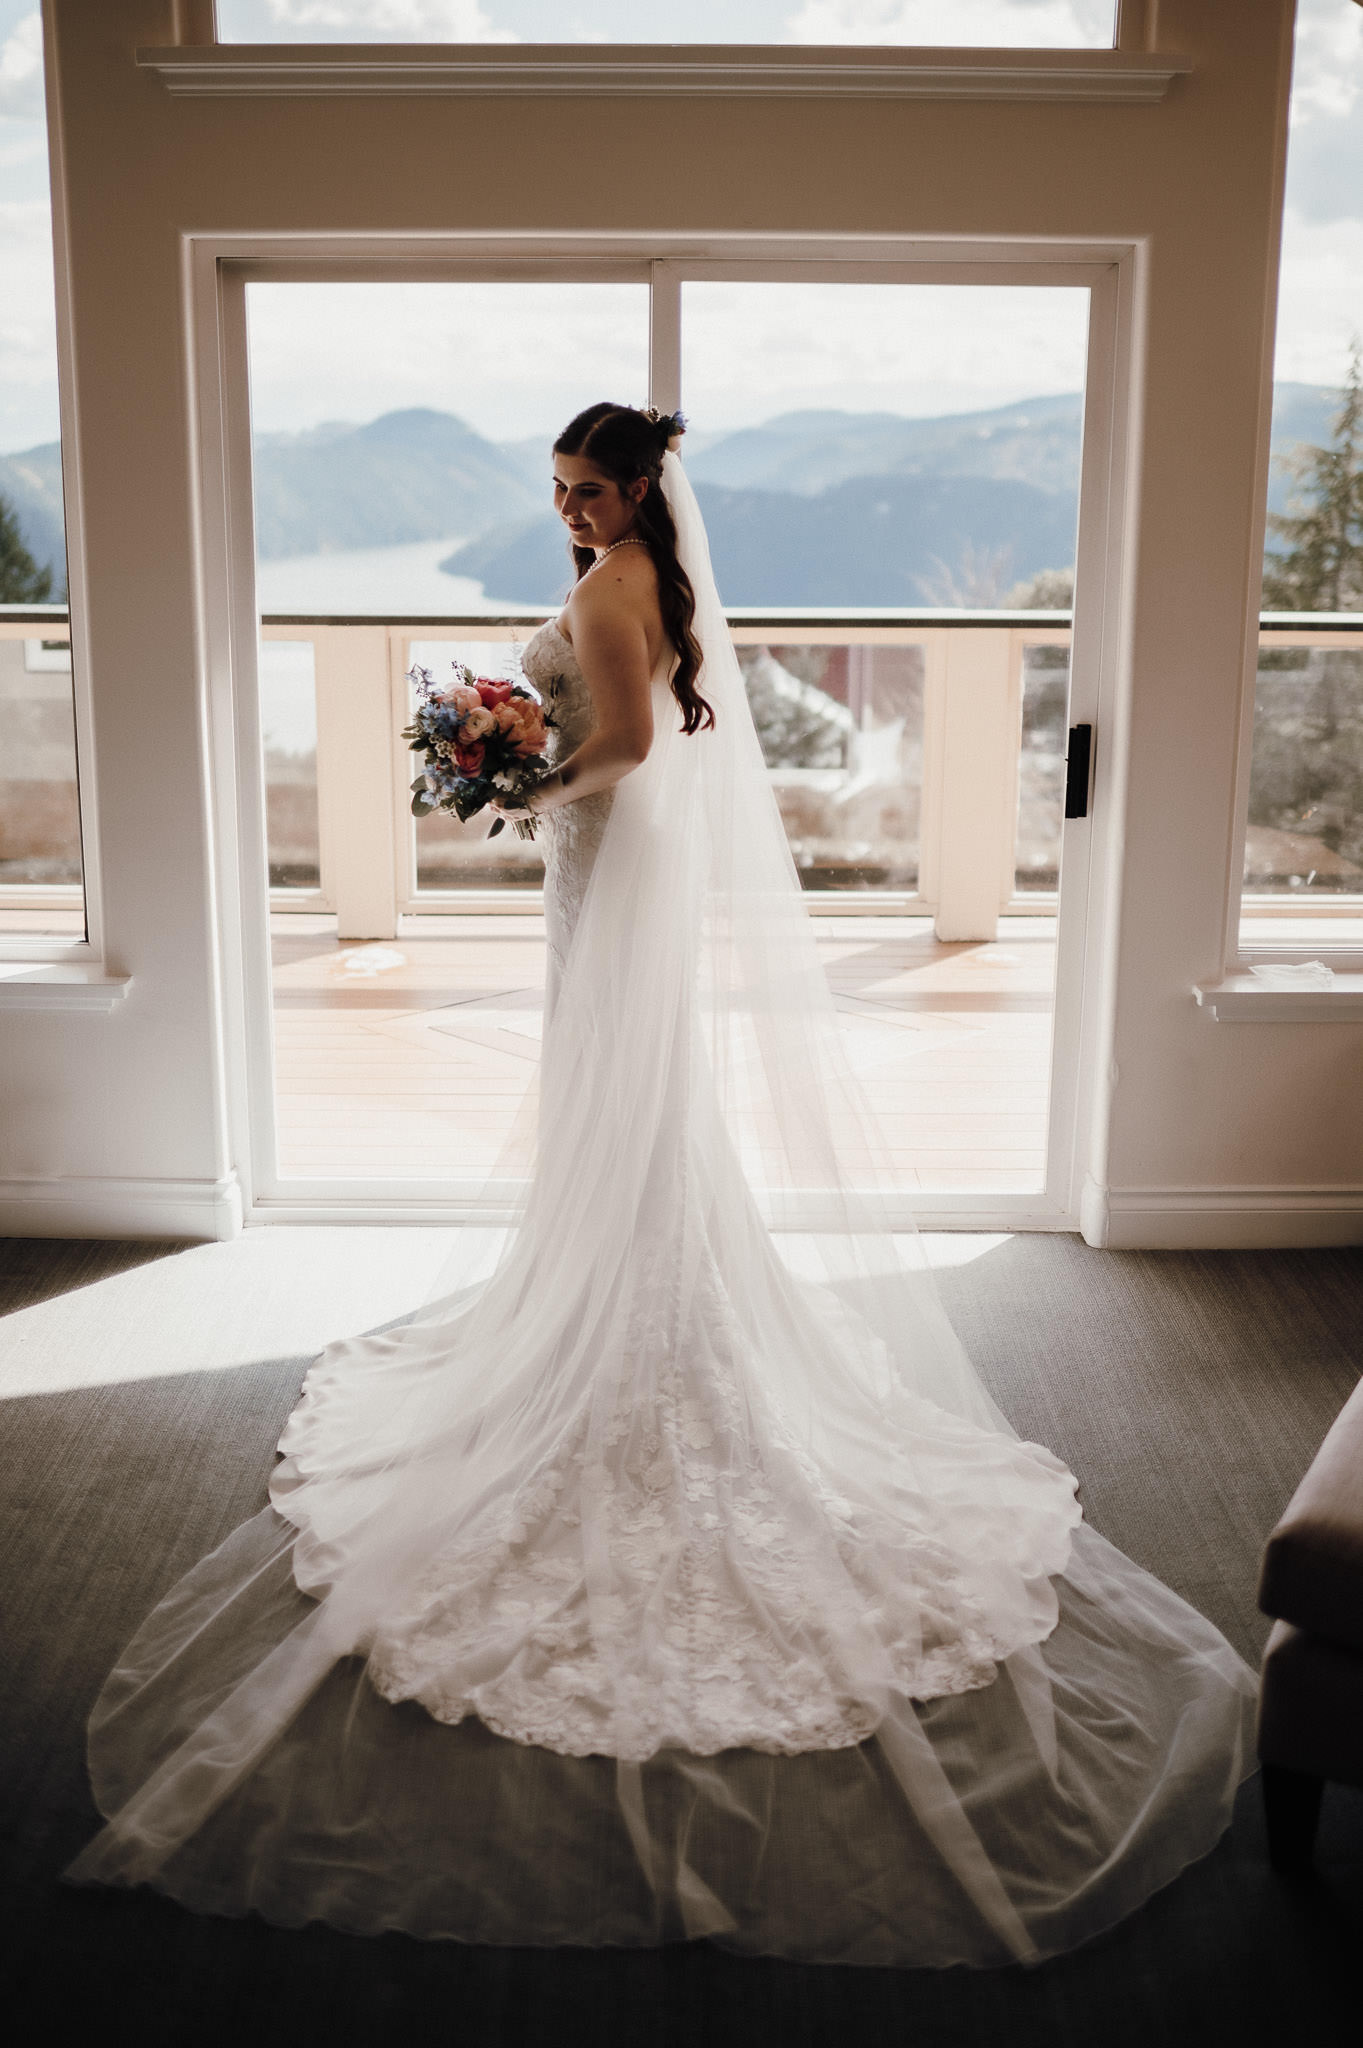 Wedding Photographer Victoria Villa Eyrie Weddings Details Bride Poses in Window